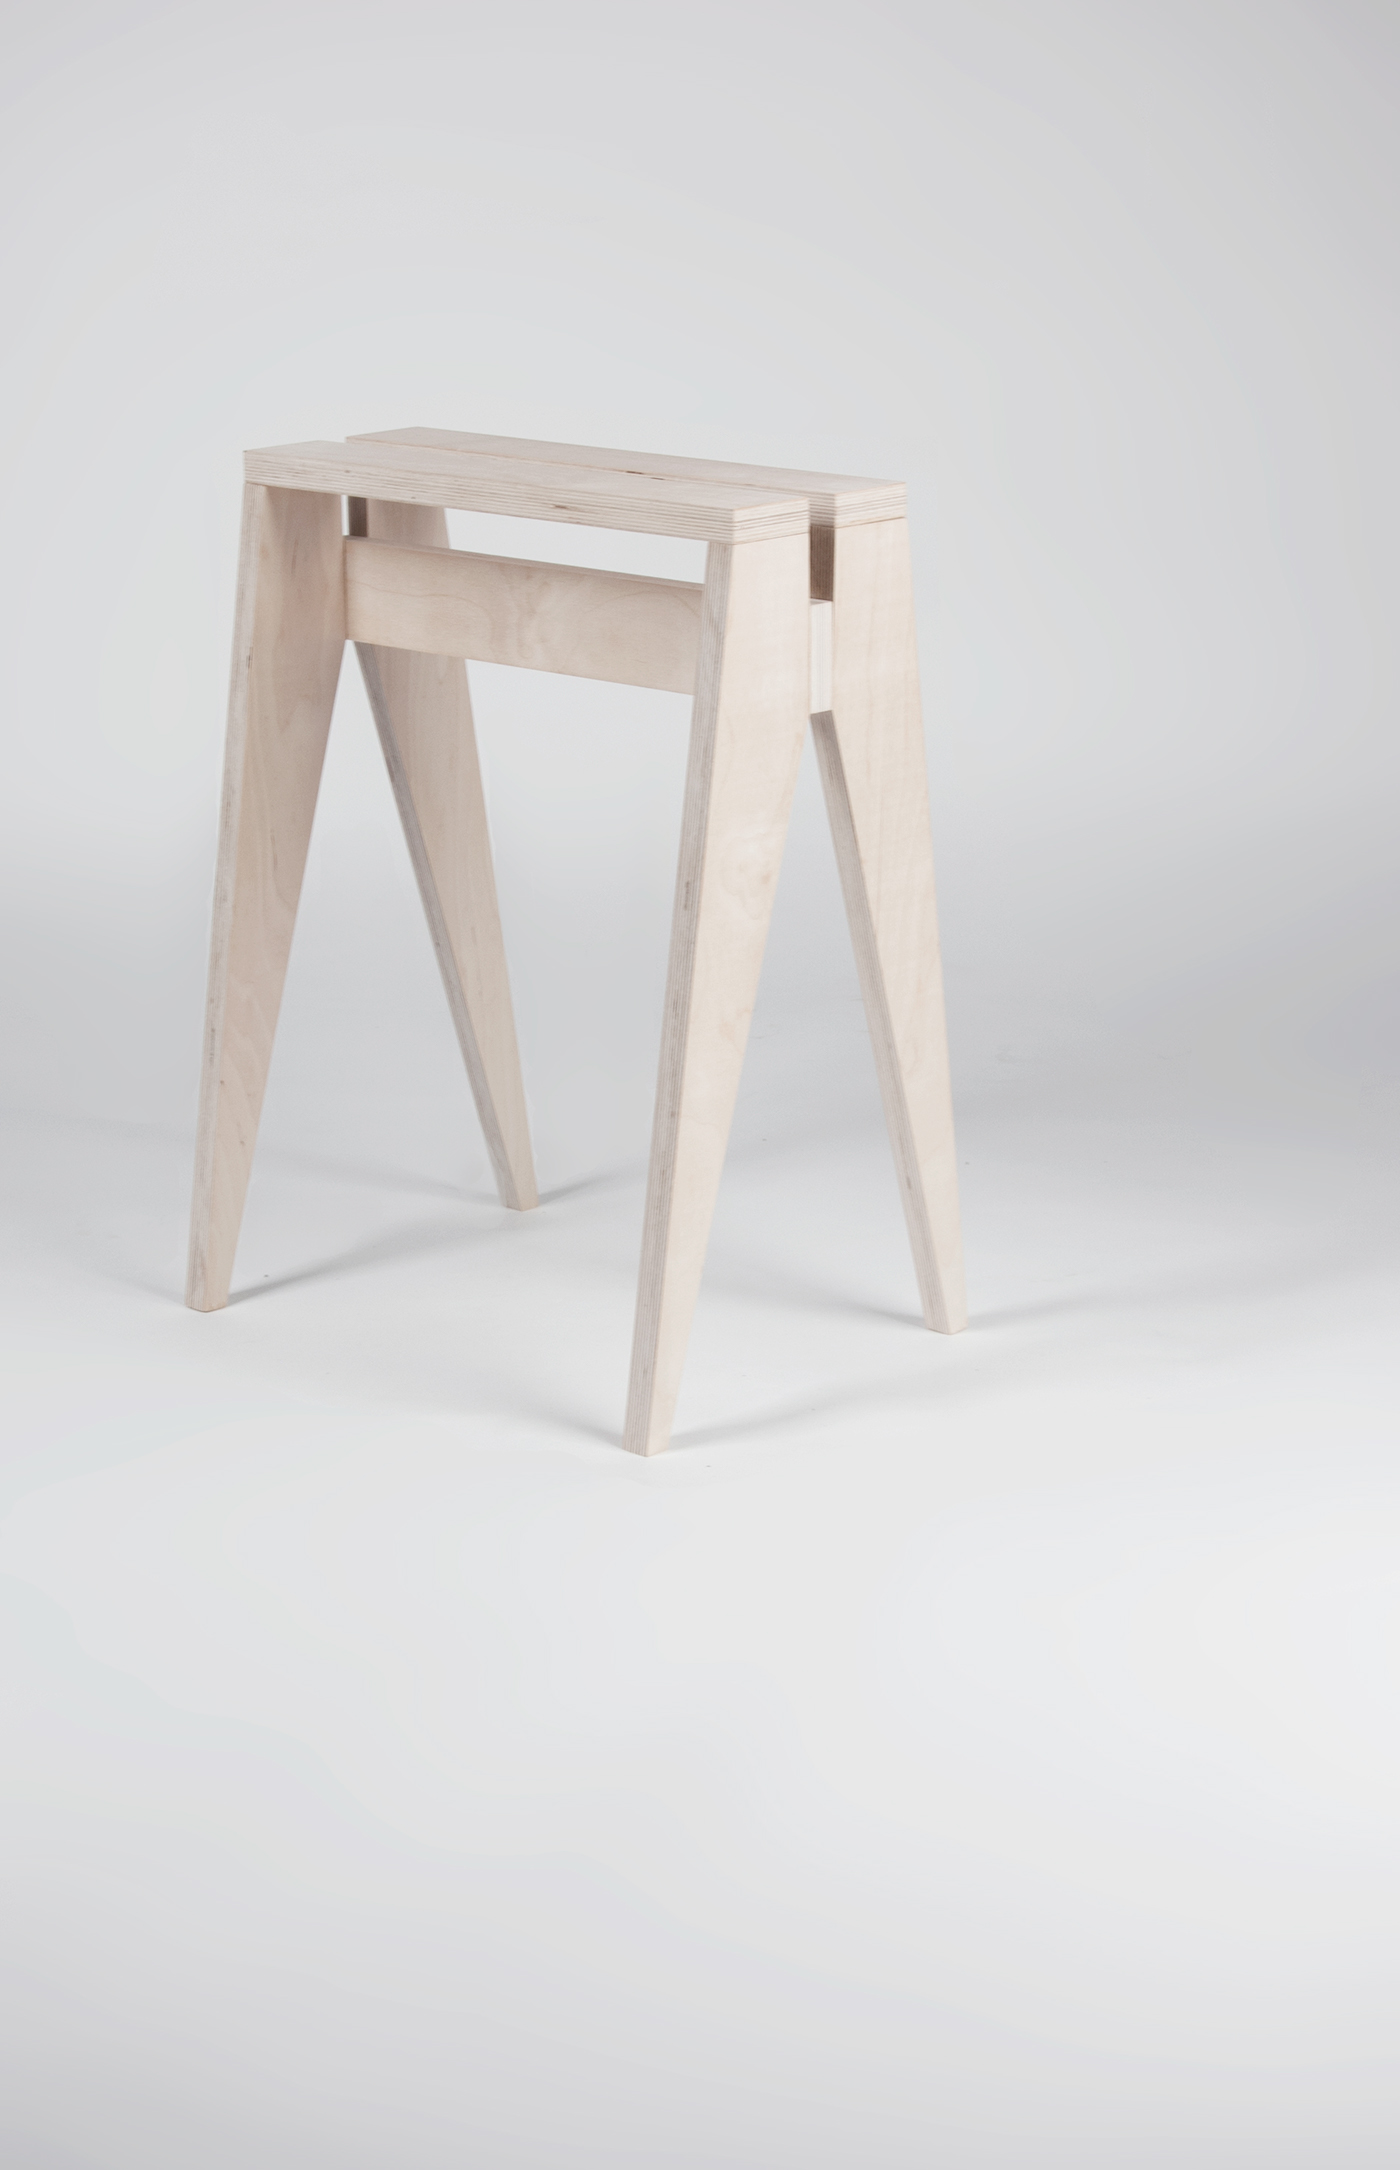 furniture design Interior stool bench chair goat ozka wood birchwood modern object home designing lightliving